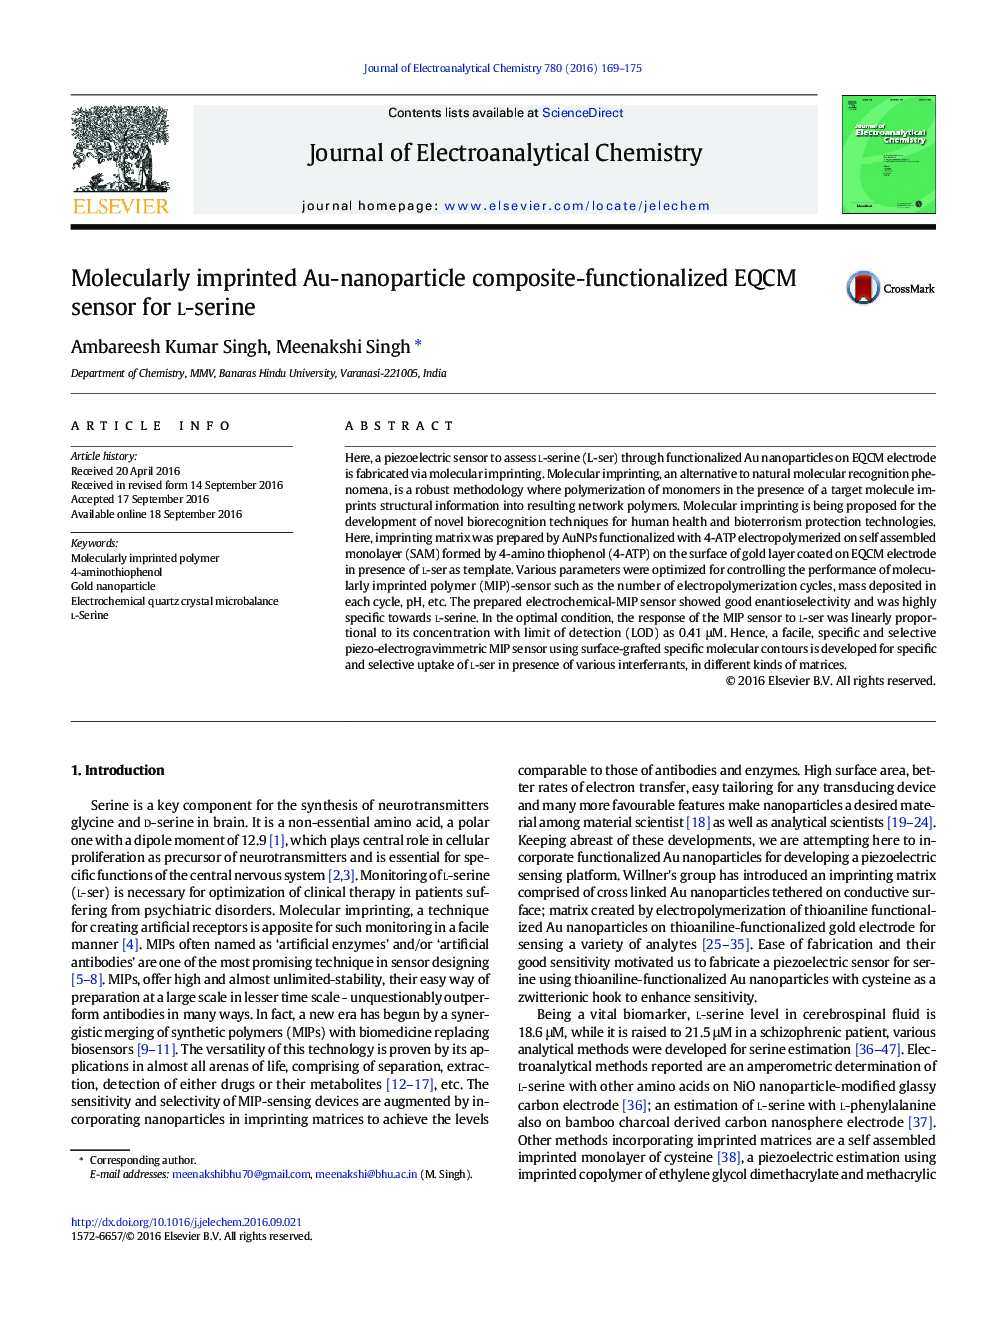 Molecularly imprinted Au-nanoparticle composite-functionalized EQCM sensor for l-serine